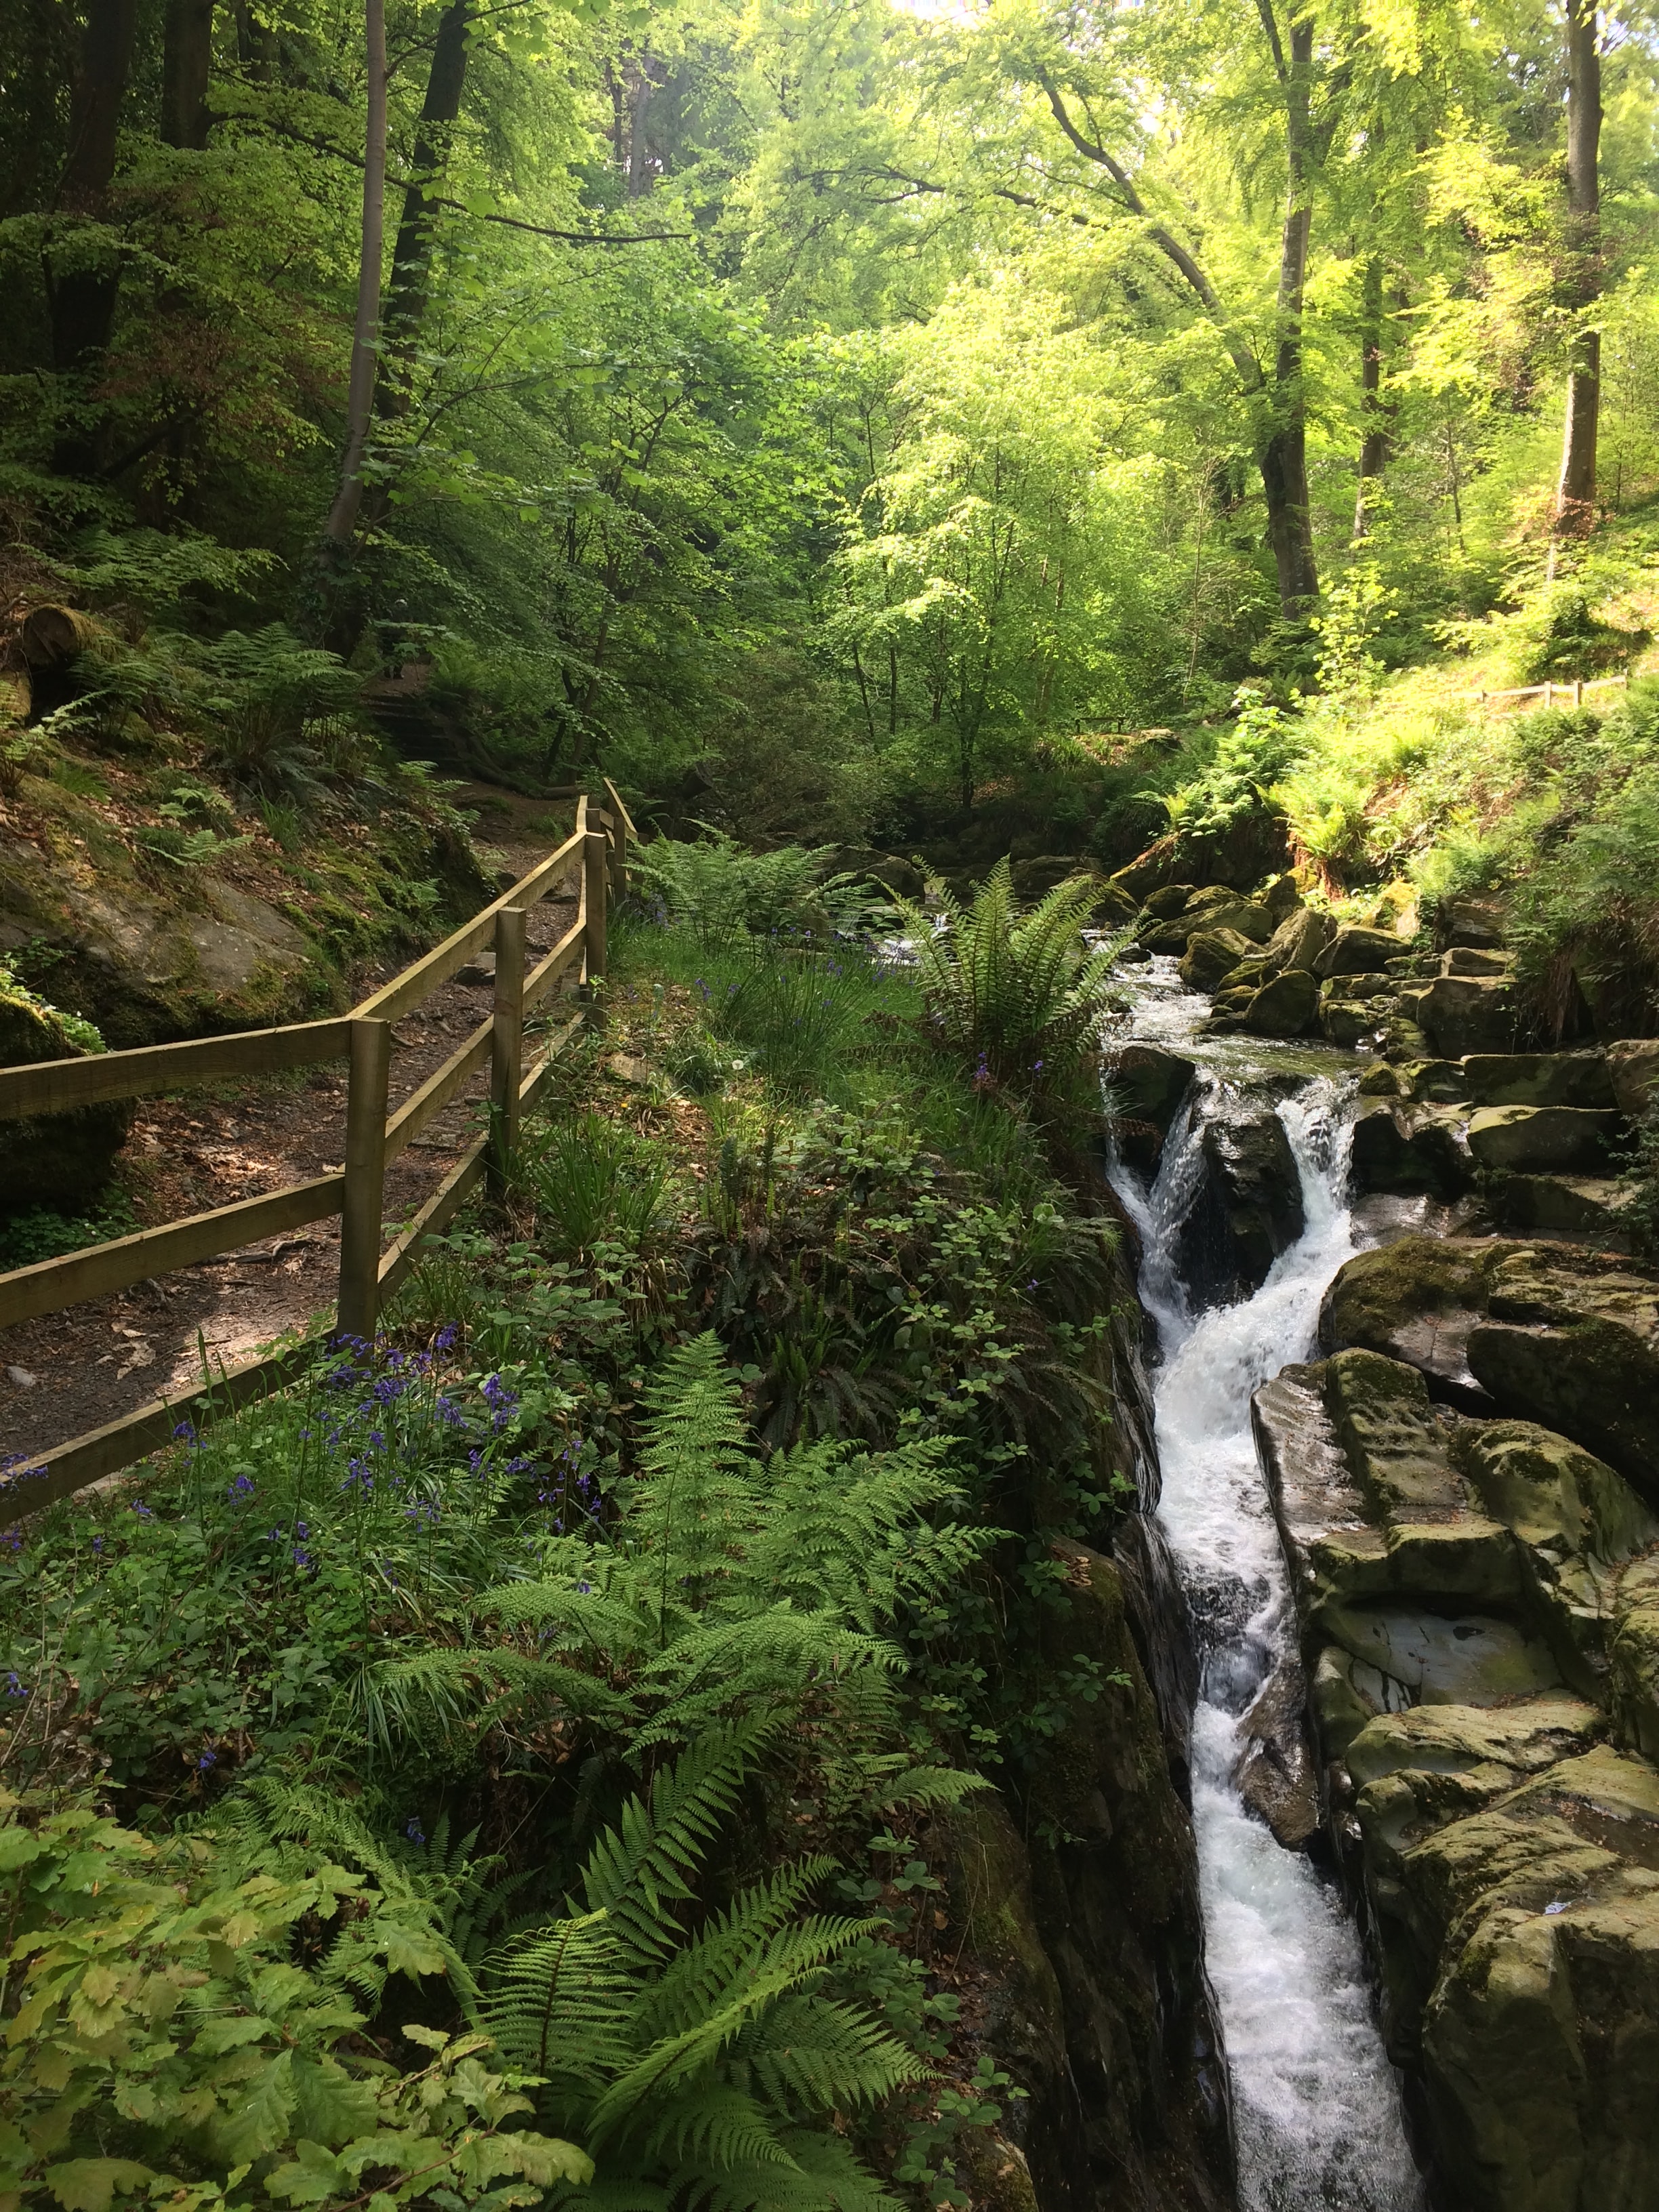 Water flowing through rocks alongside walkway with wooden rail